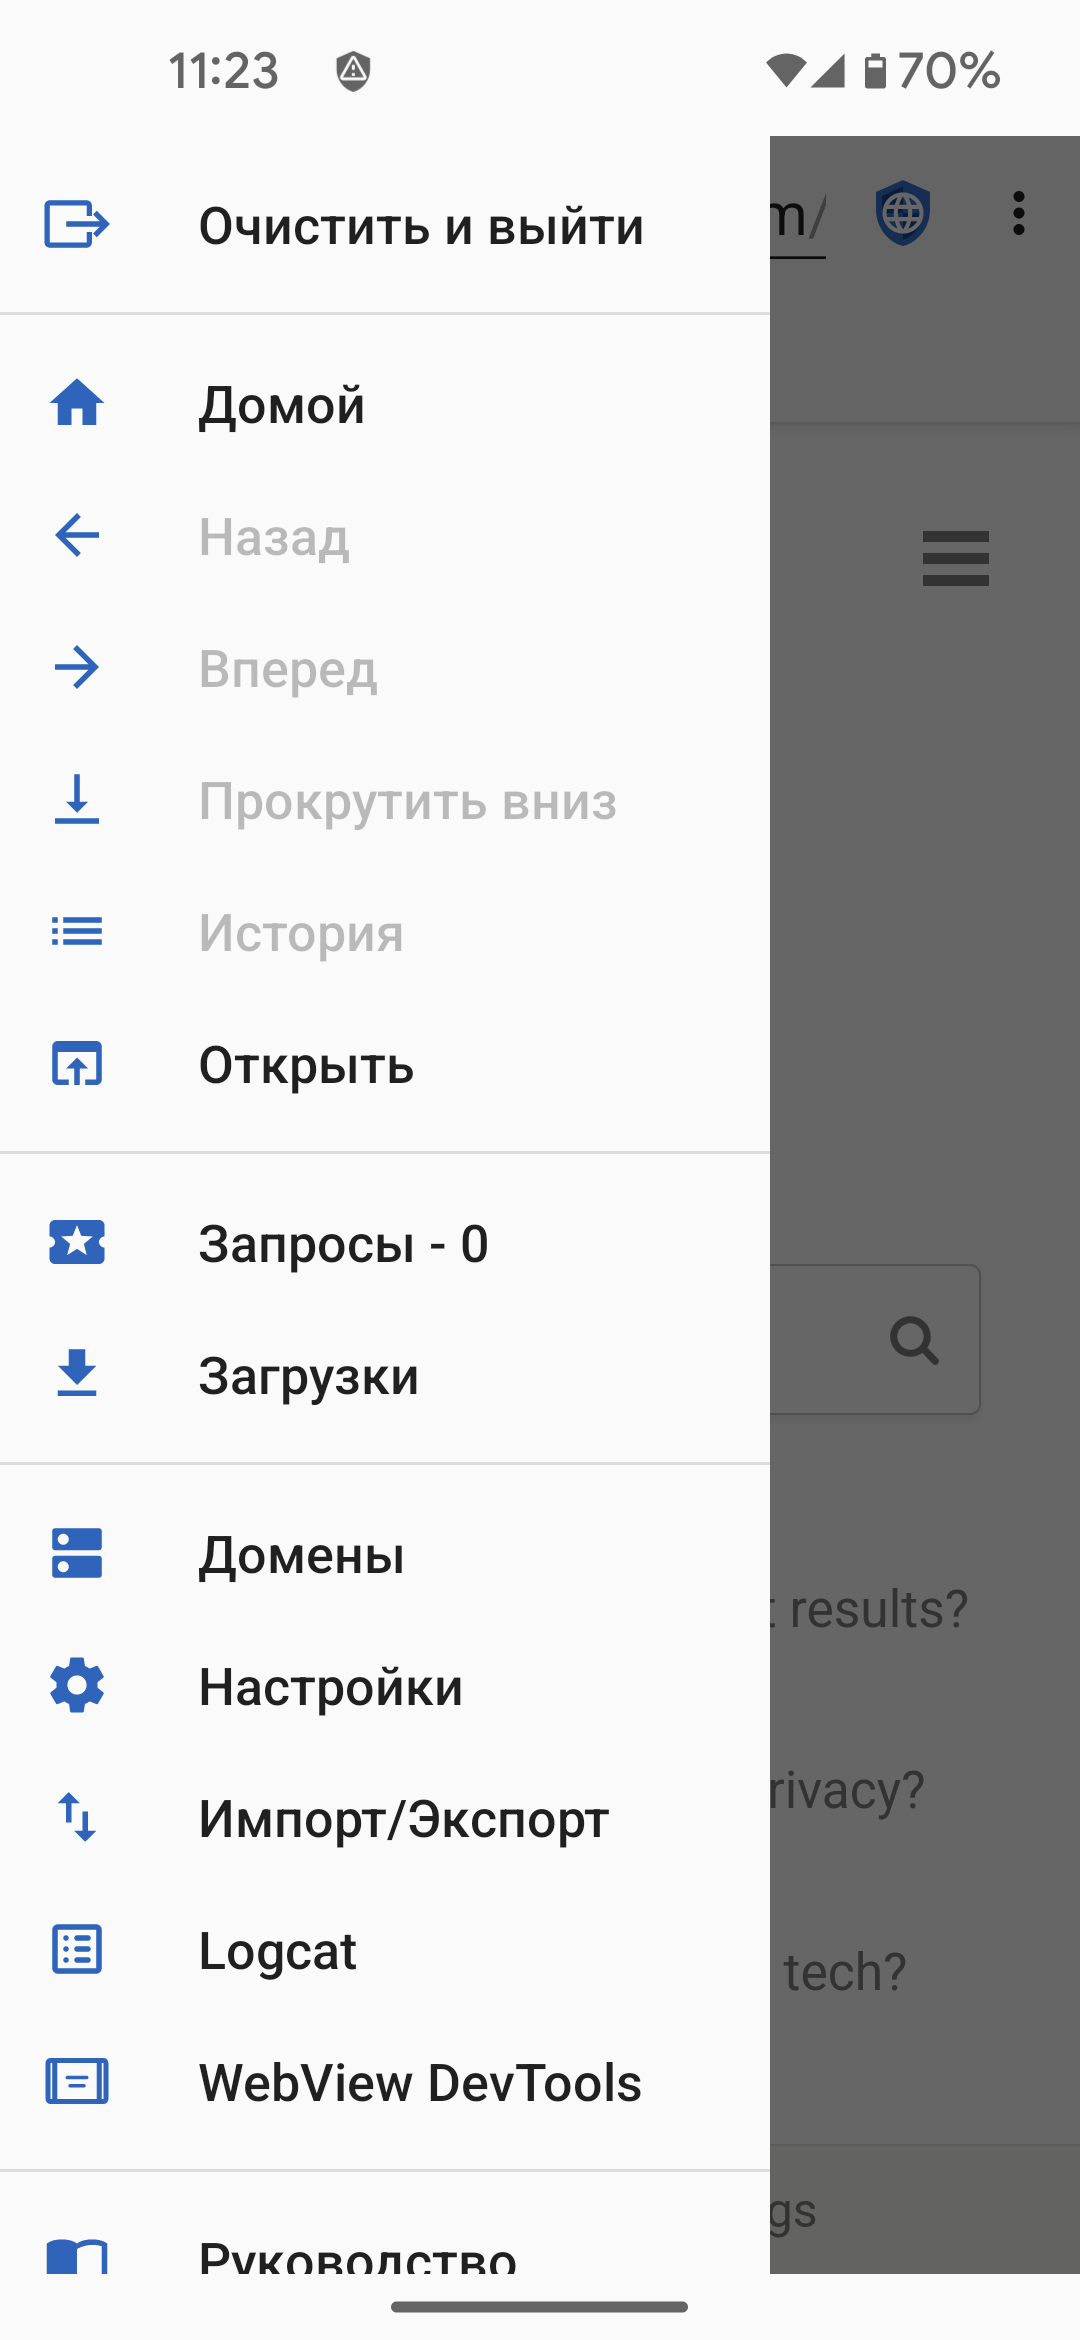 fastlane/metadata/android/ru-RU/images/phoneScreenshots/02 - Navigation Menu - ru.png